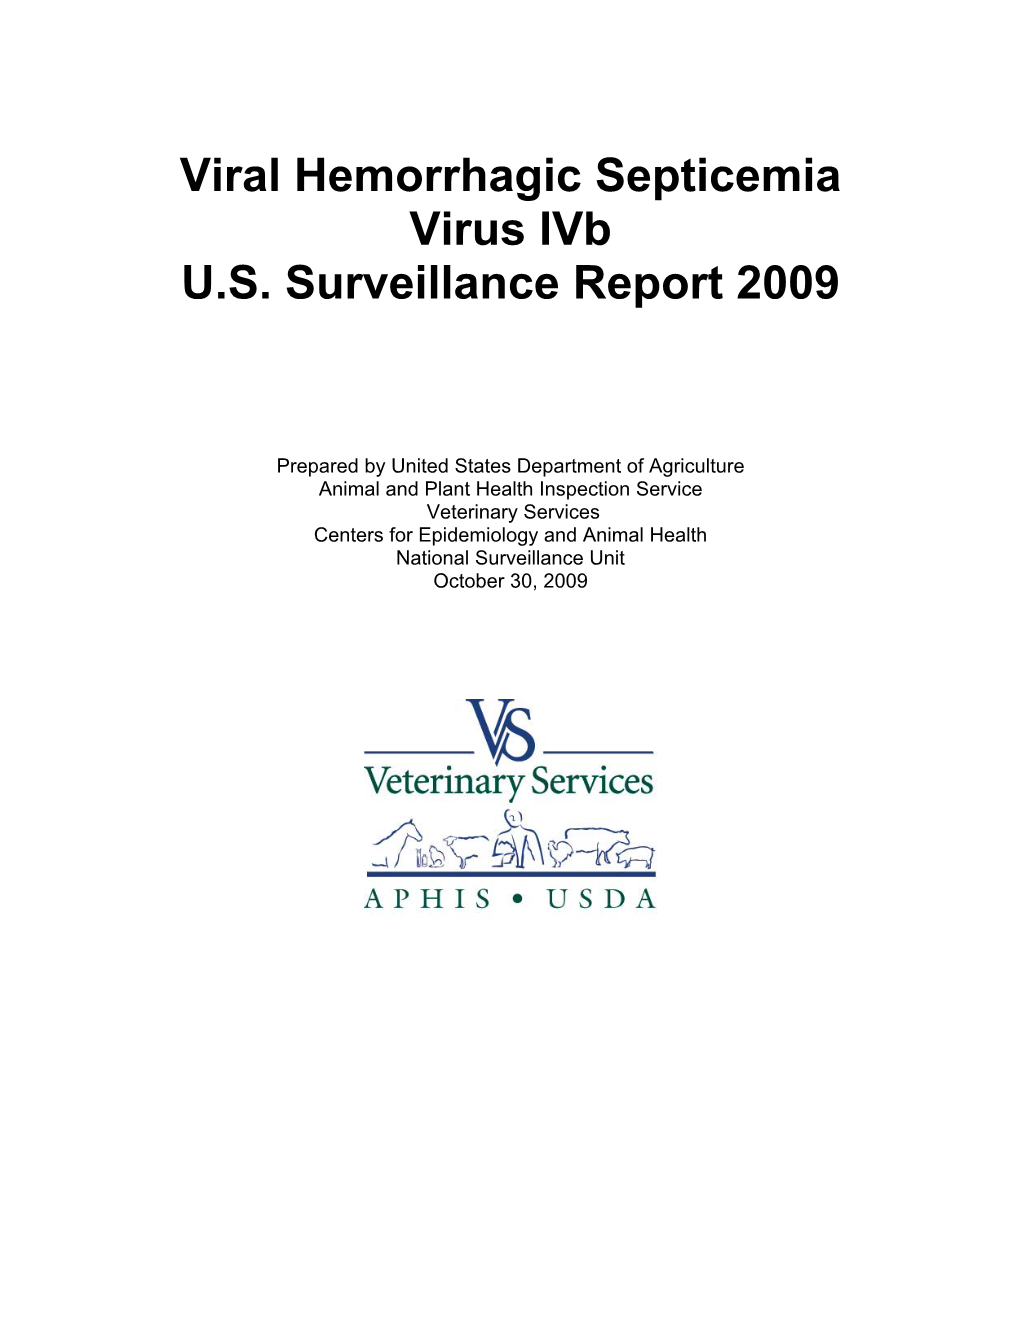 2009 Viral Hemorrhagic Septicemia Virus Ivb U.S. Surveillance Report